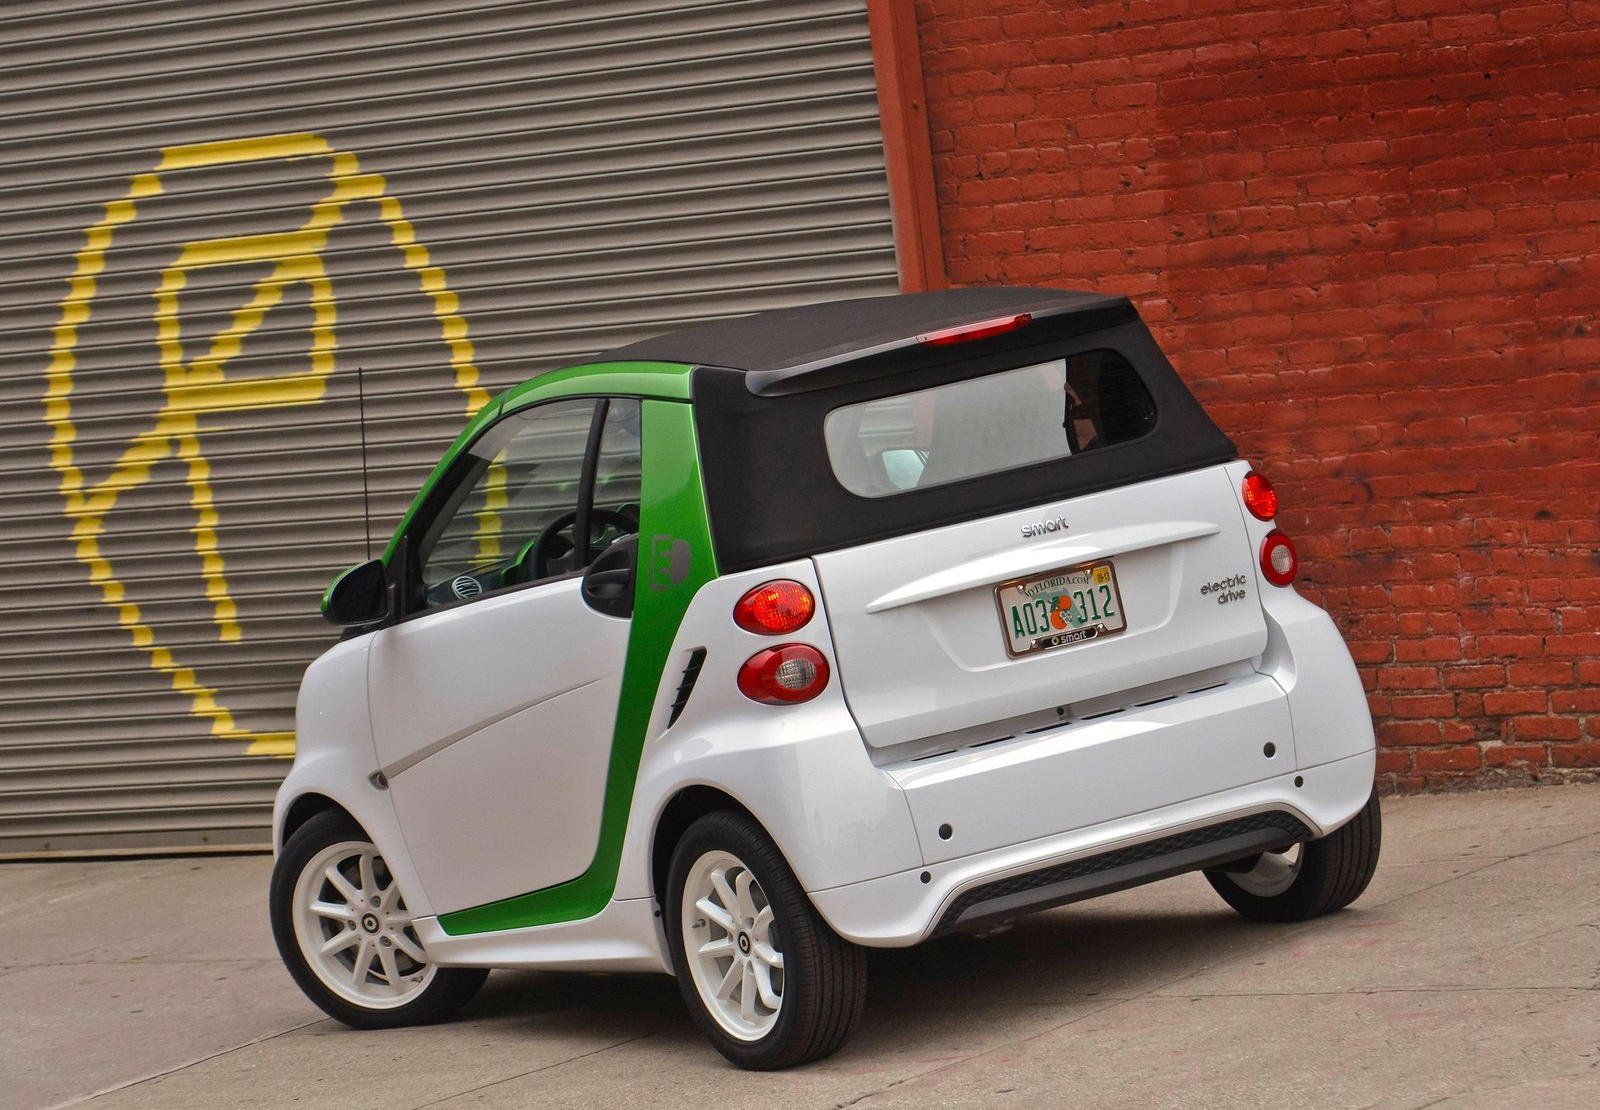 2014 smart fortwo Electric Drive Cabrio Exterior Photos